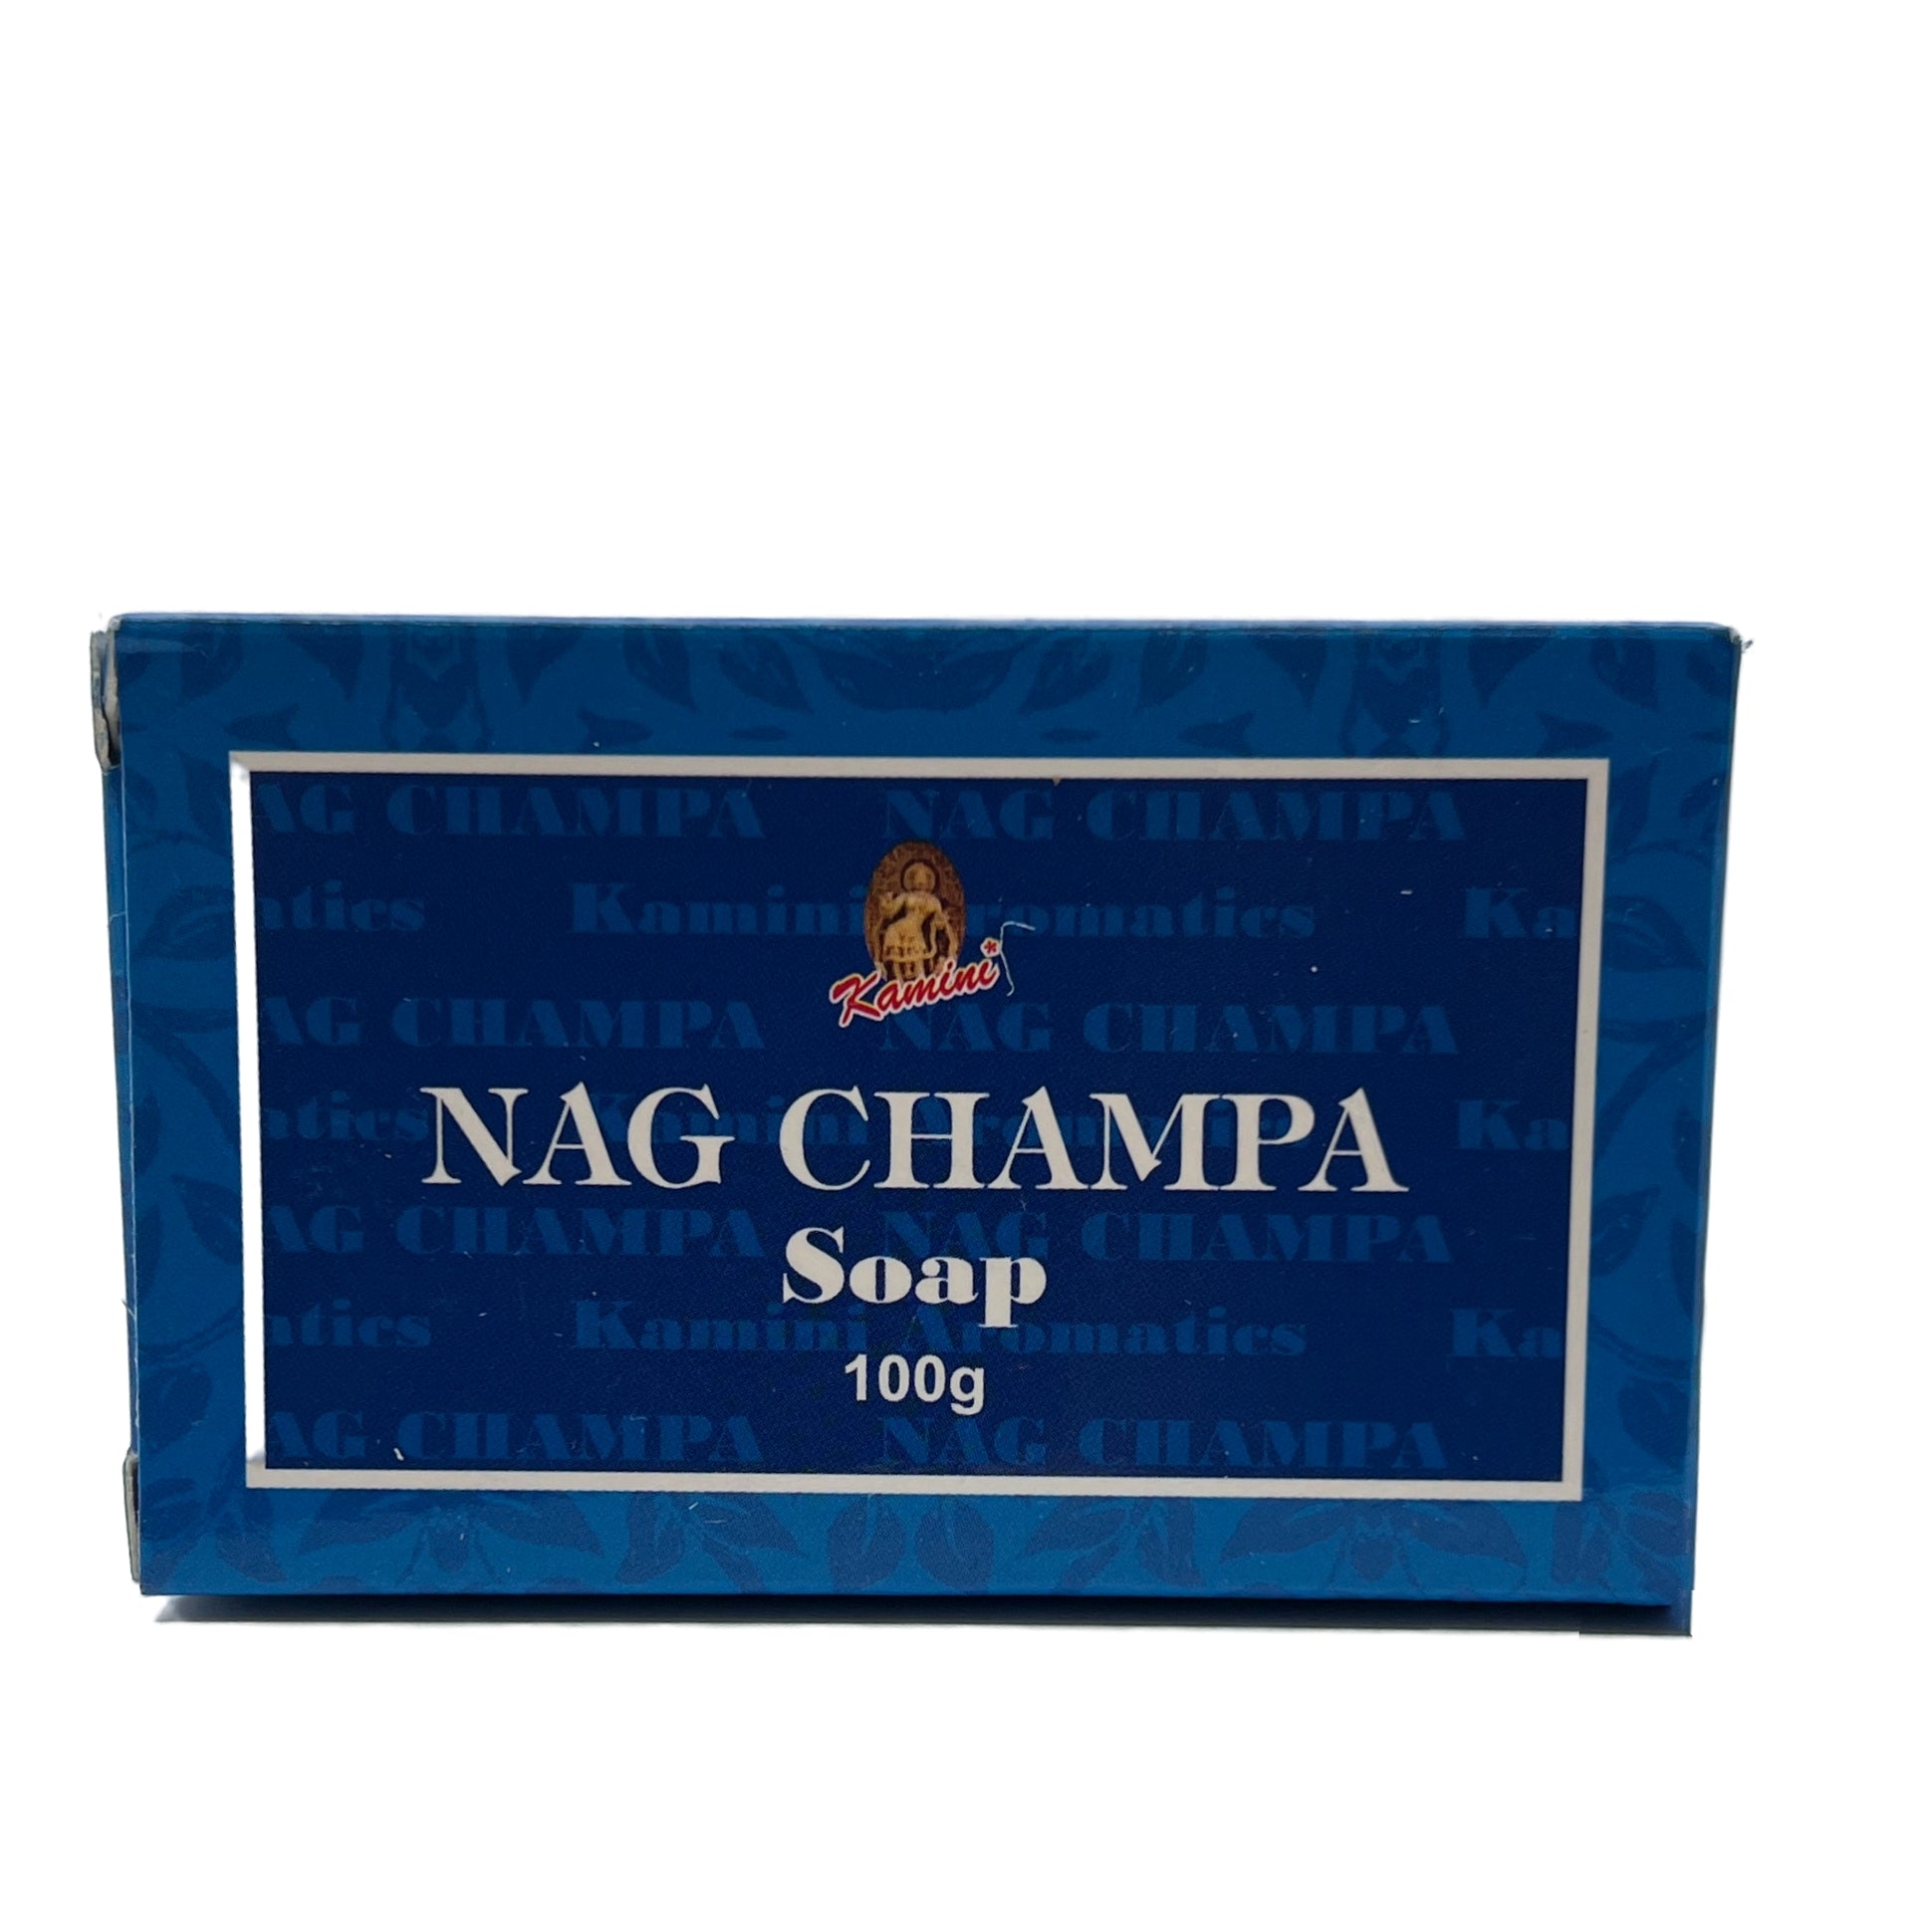 Blue box with white writing Nag Champa Soap